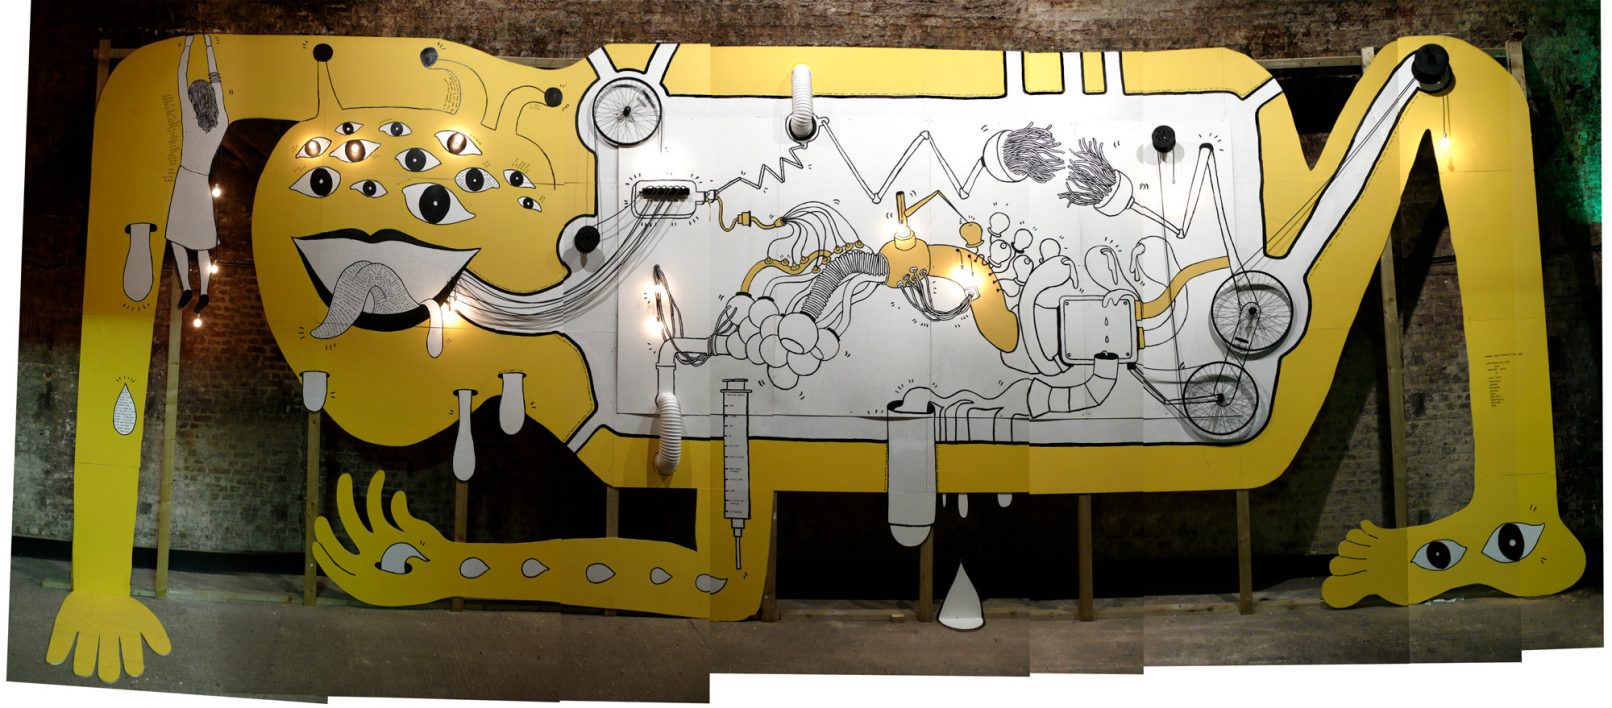 Eating Stories, 12 x 6 m art installation, Shunt Vaults, London